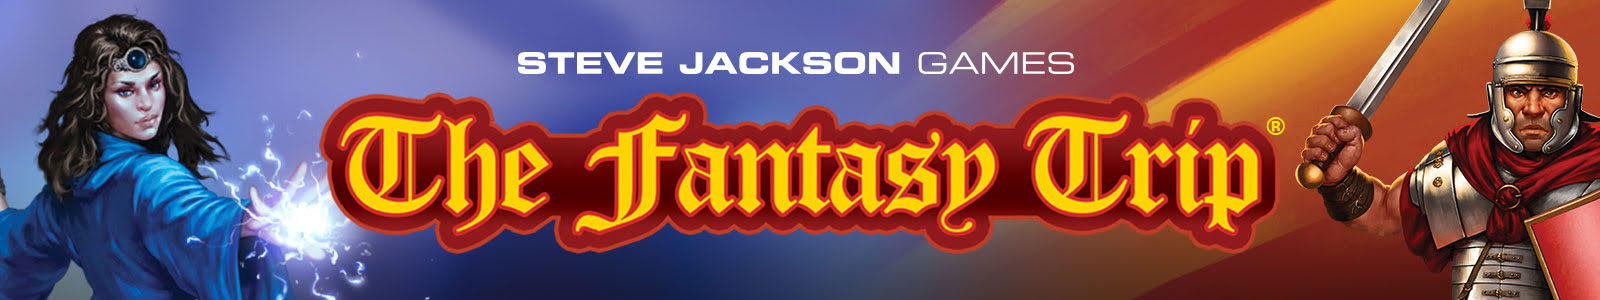 The Fantasy Trip logo